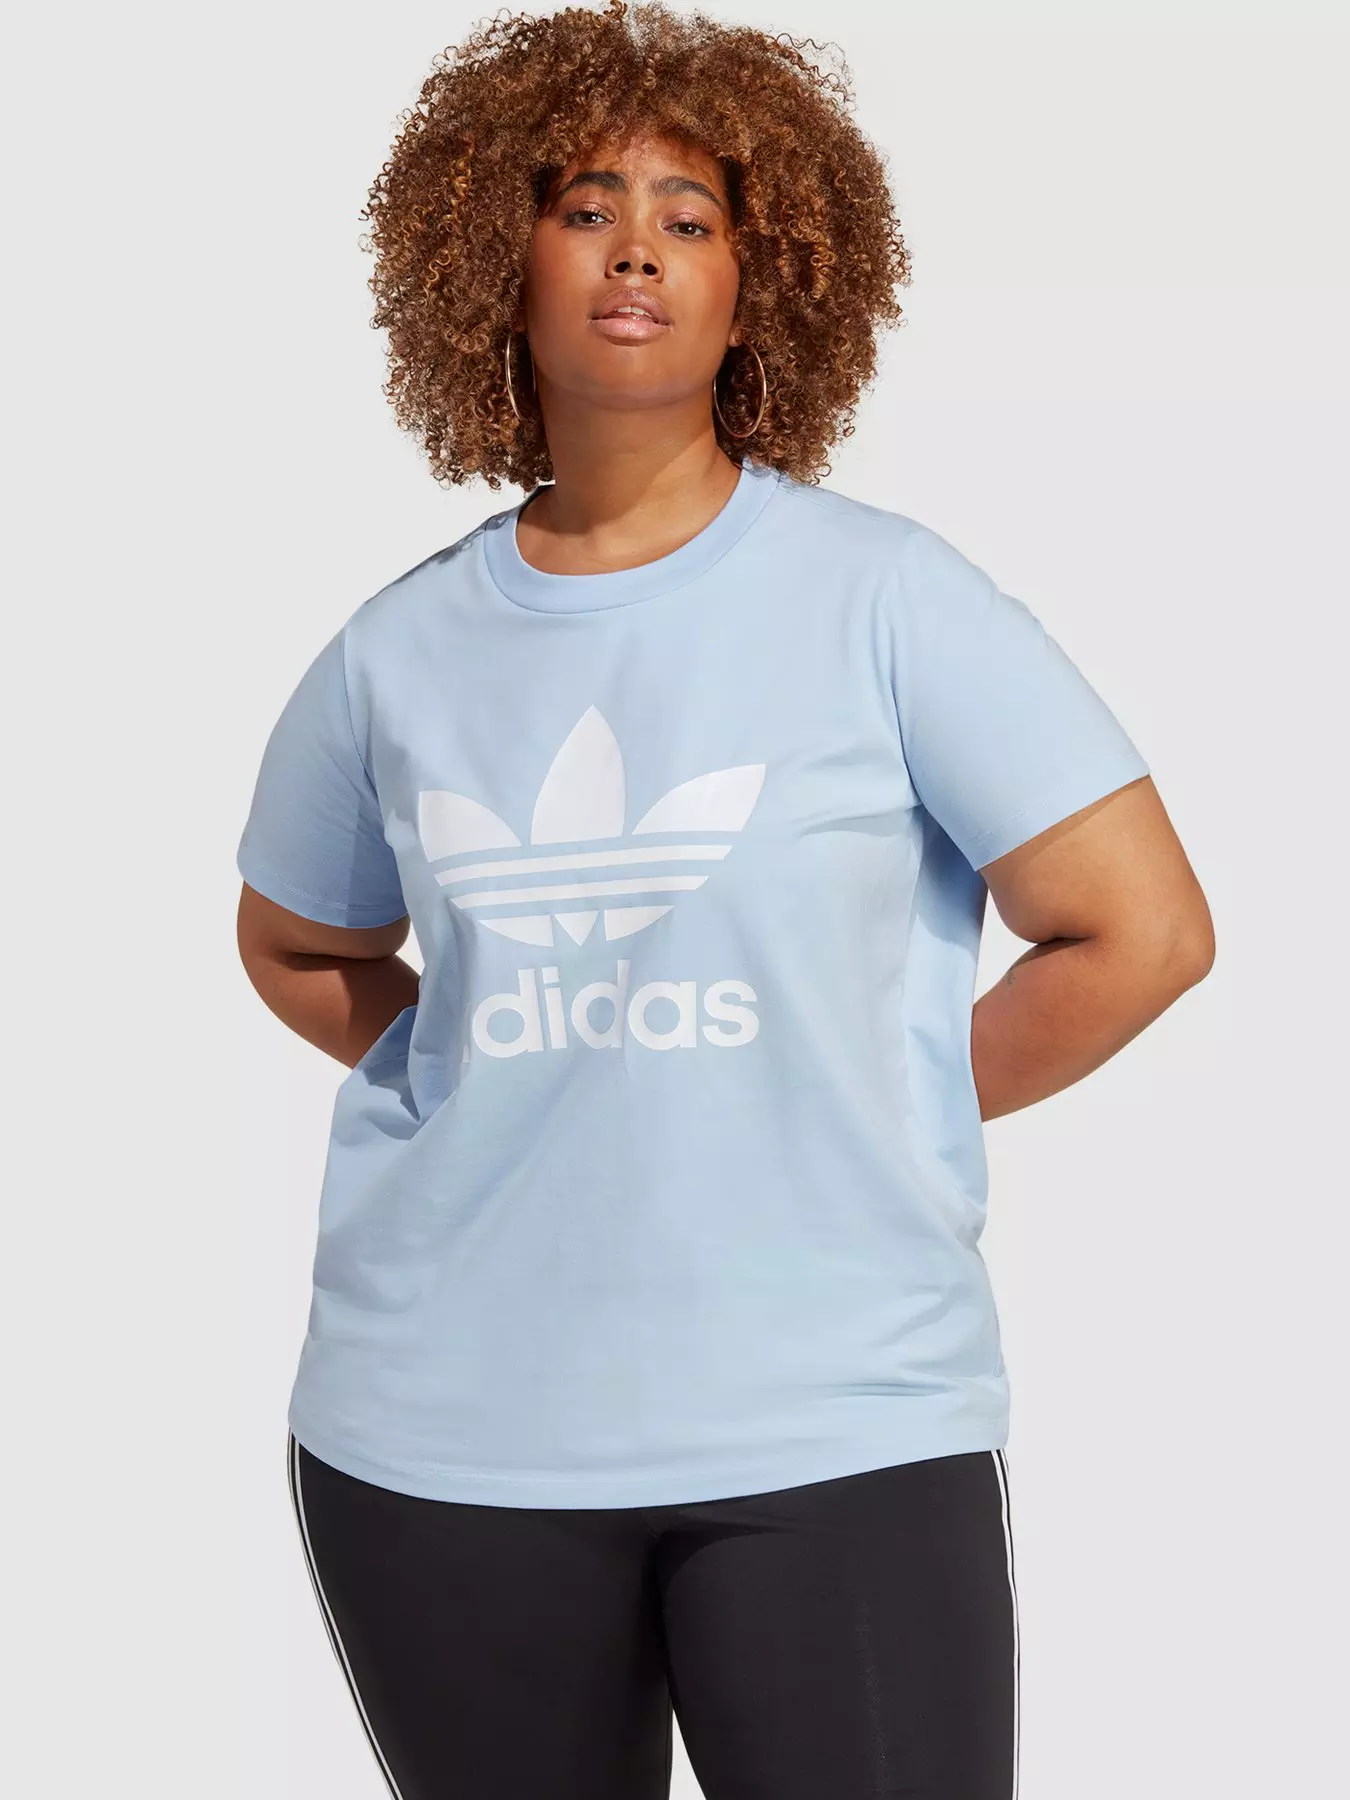 Adidas T-shirts | Womens sports | Sports & | www.very.co.uk